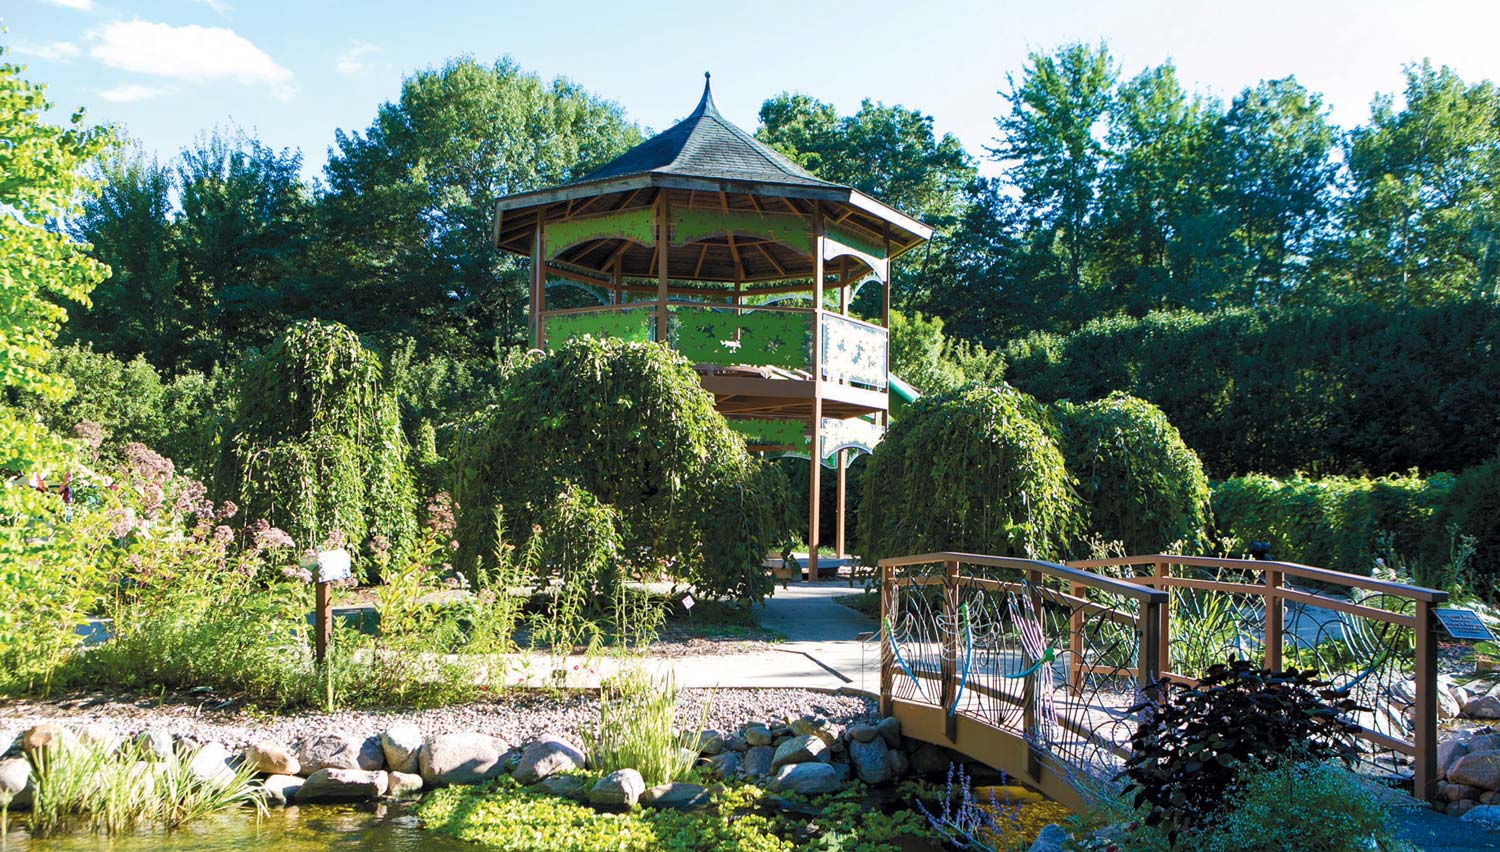 Children’s Garden treehouse at the Green Bay Botanical Garden